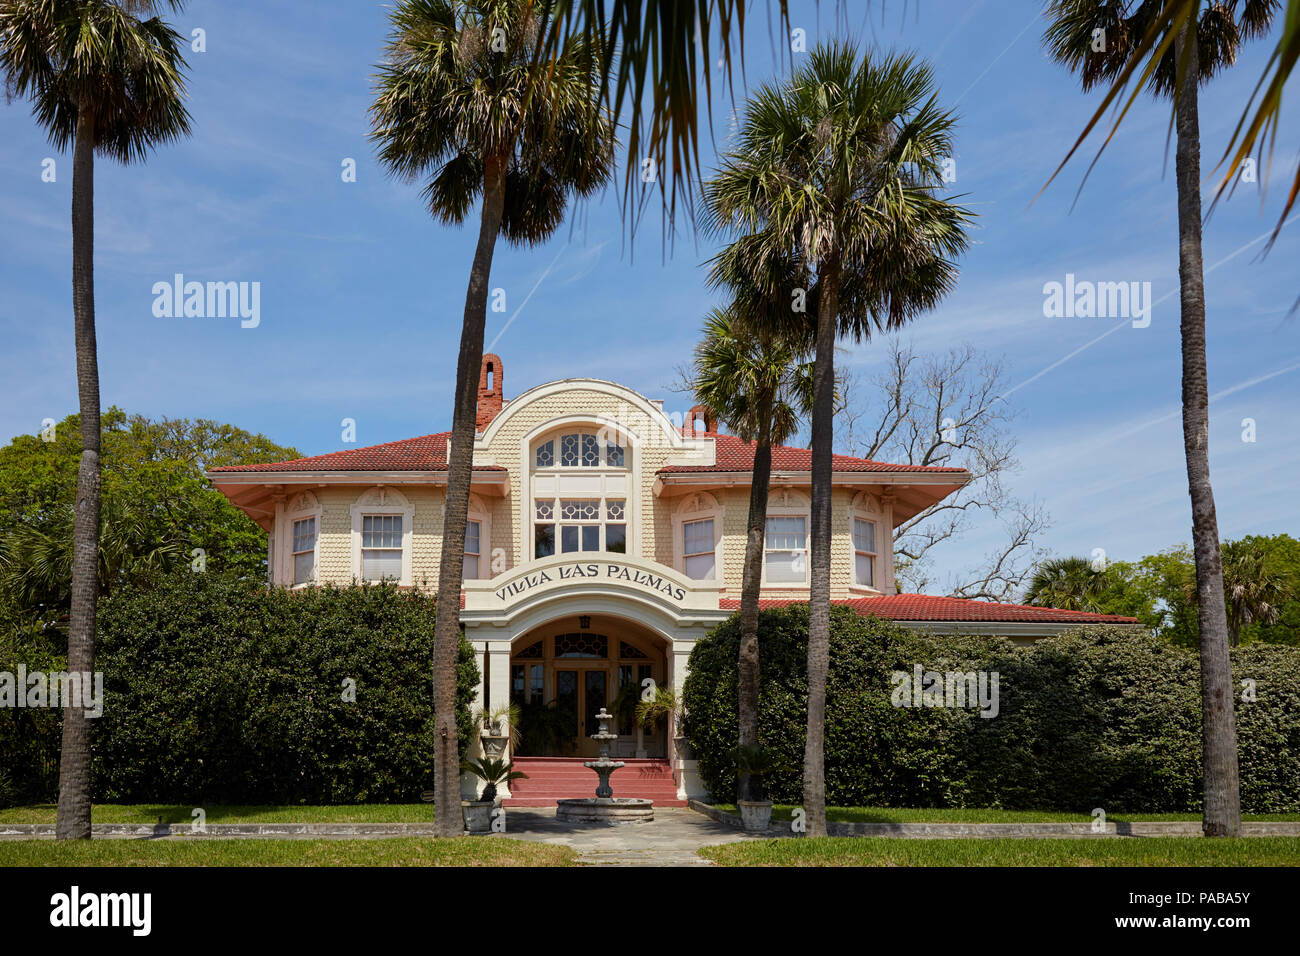 Villa Las Palmas, accueil de Nathaniel B. Borden à Fernandina Beach, Floride construit vers 1909 Banque D'Images